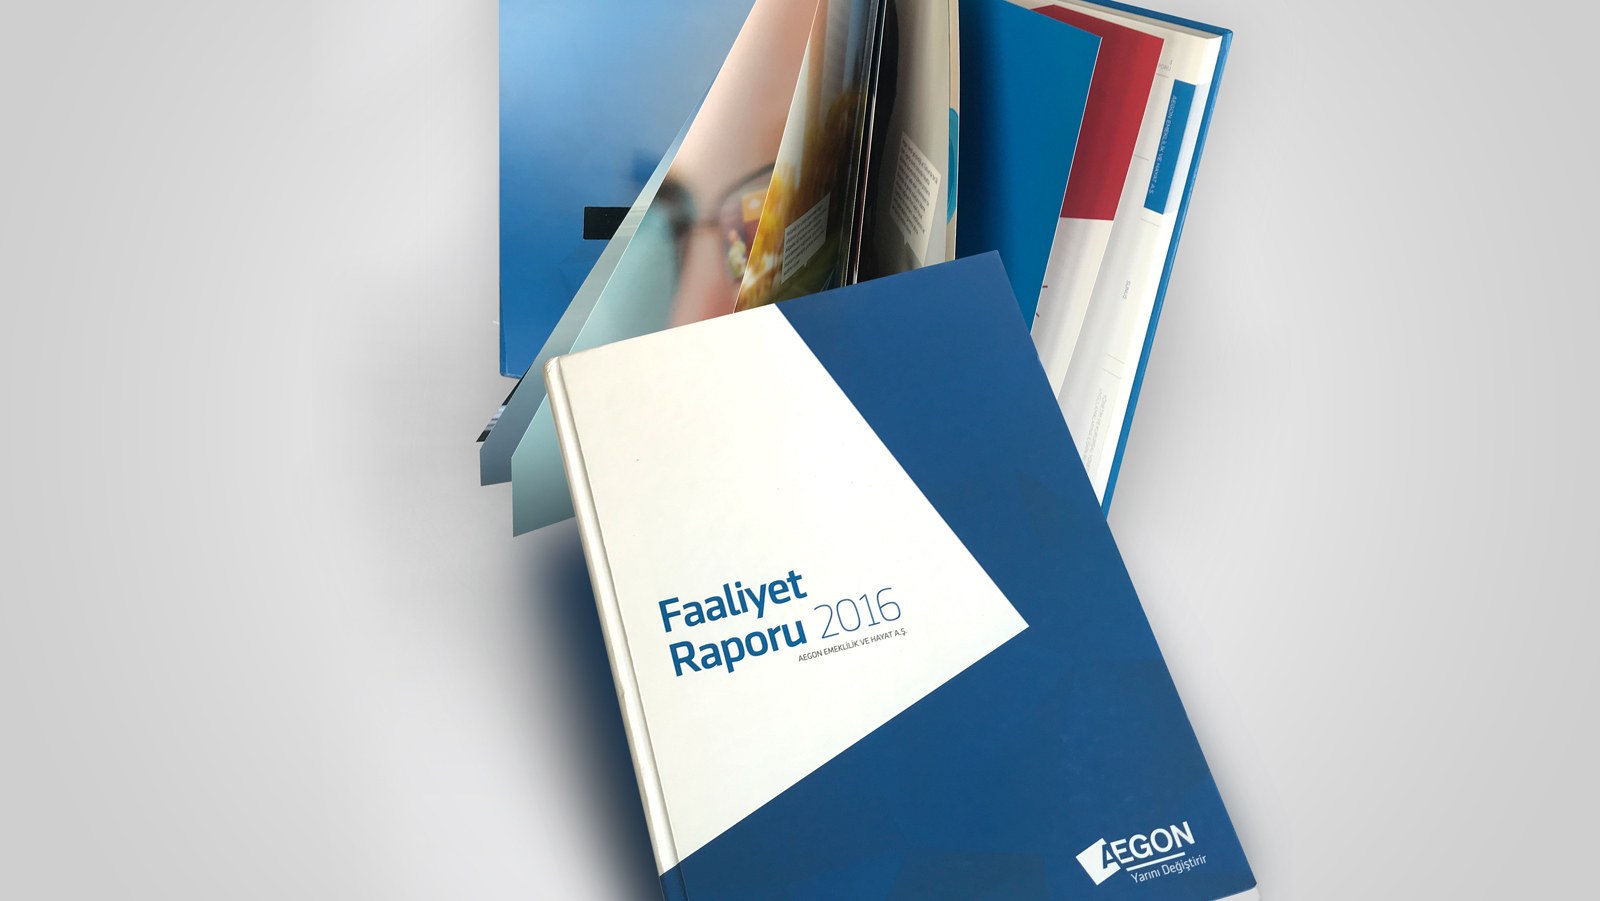 AEGON EMEKLİLİK VE HAYAT / 2016 Faaliyet Raporu / 2016 Annual Report